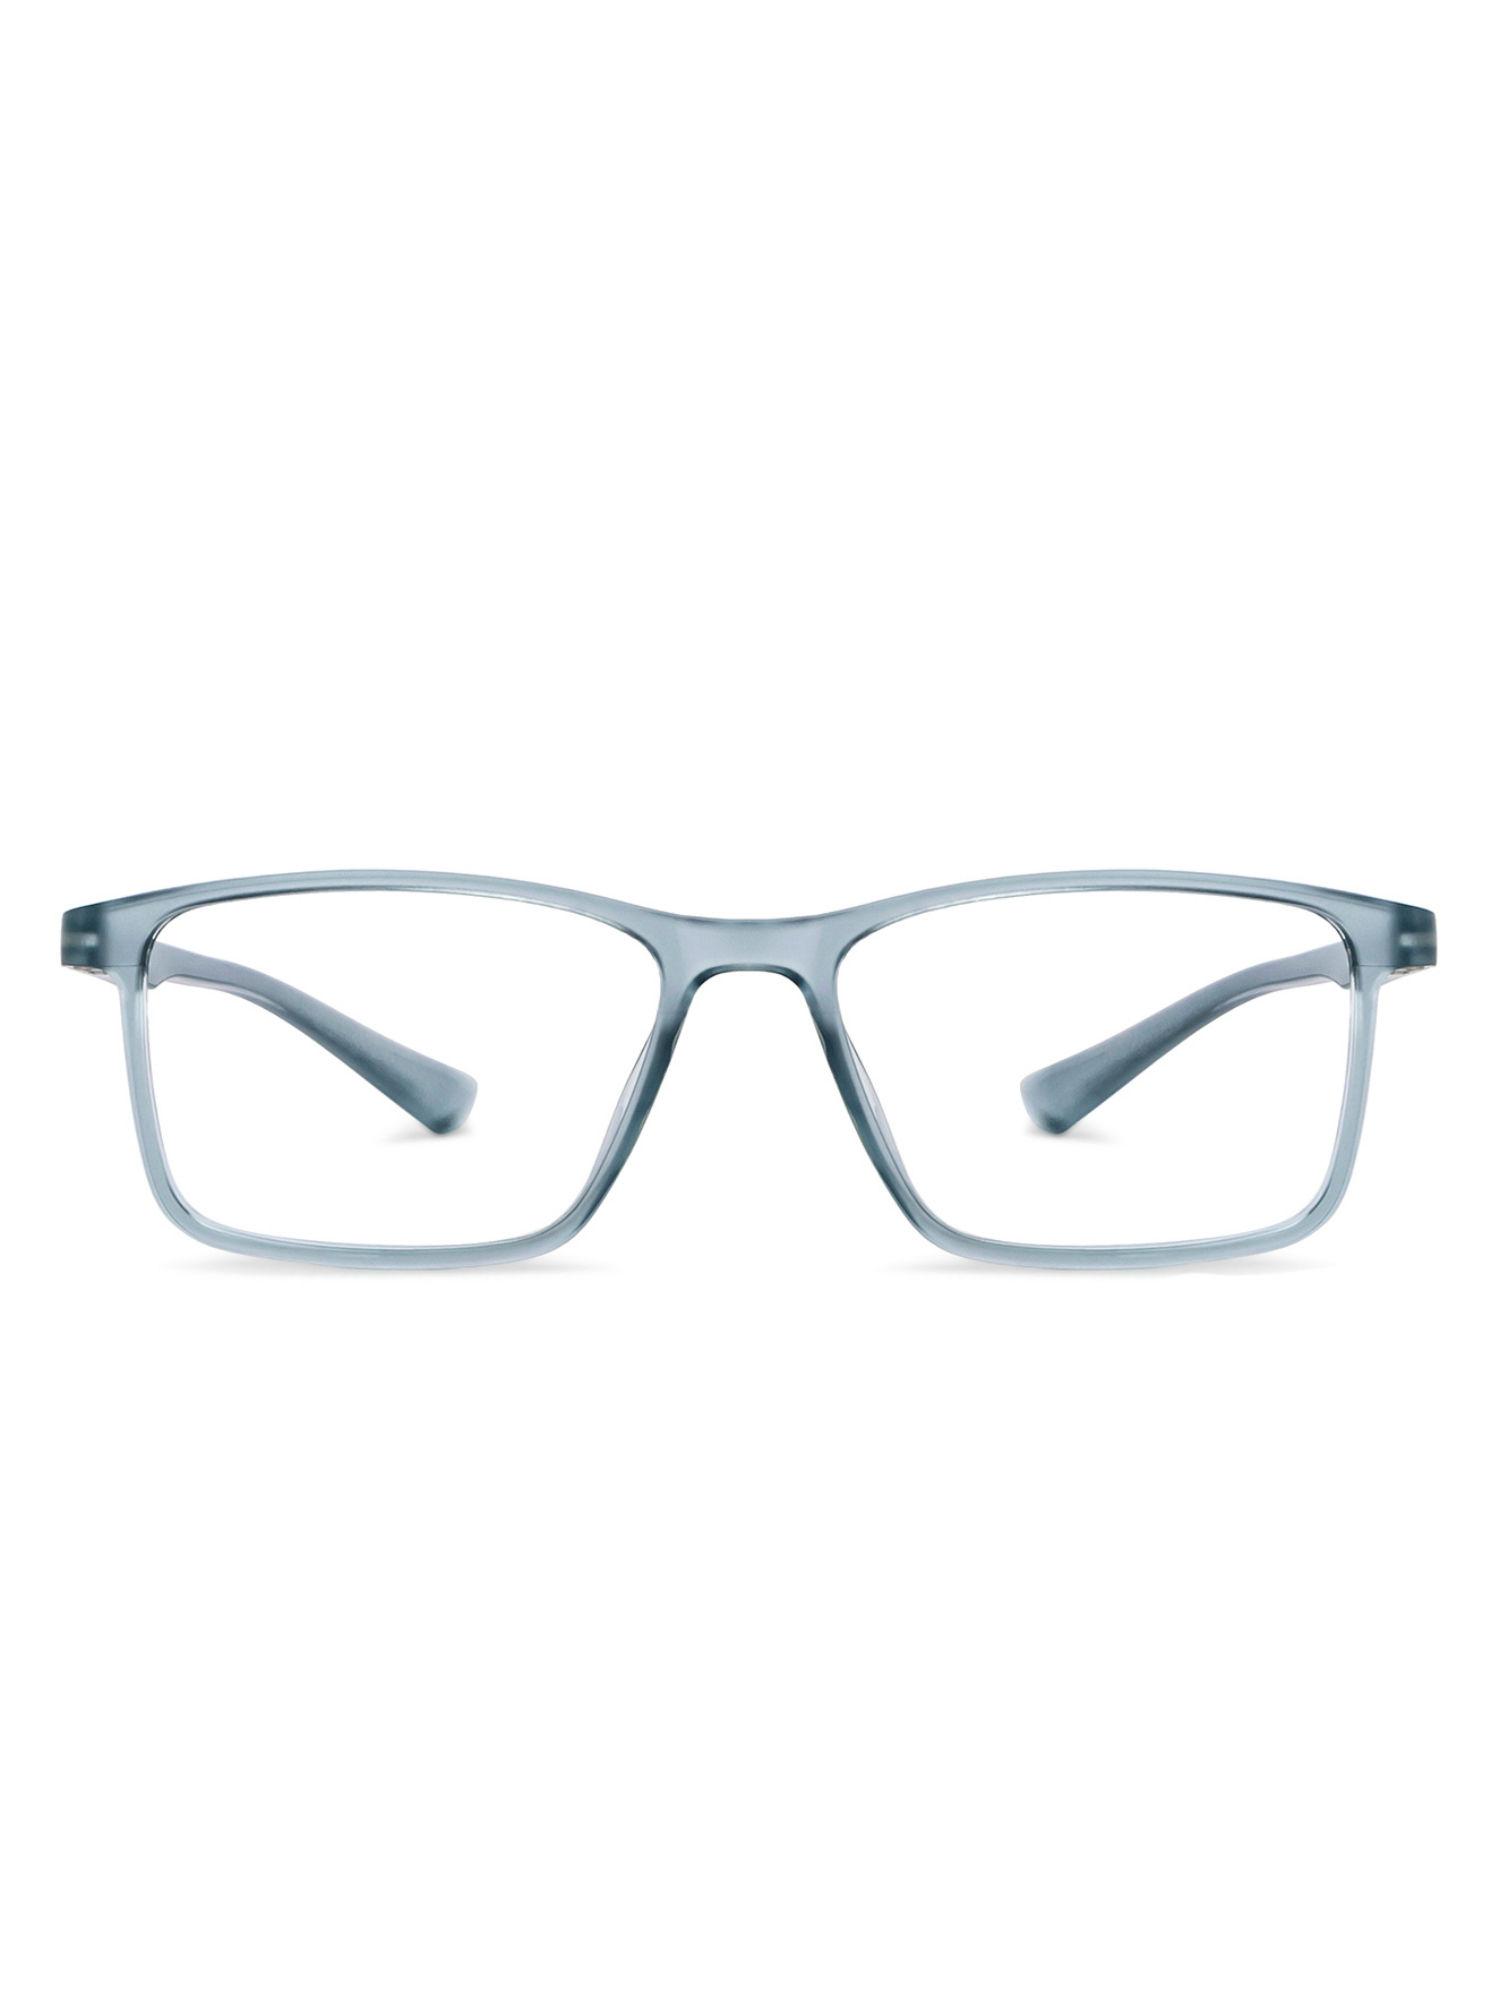 grey rectangle medium blue cut anti-glare zero power computer glasses for men & women